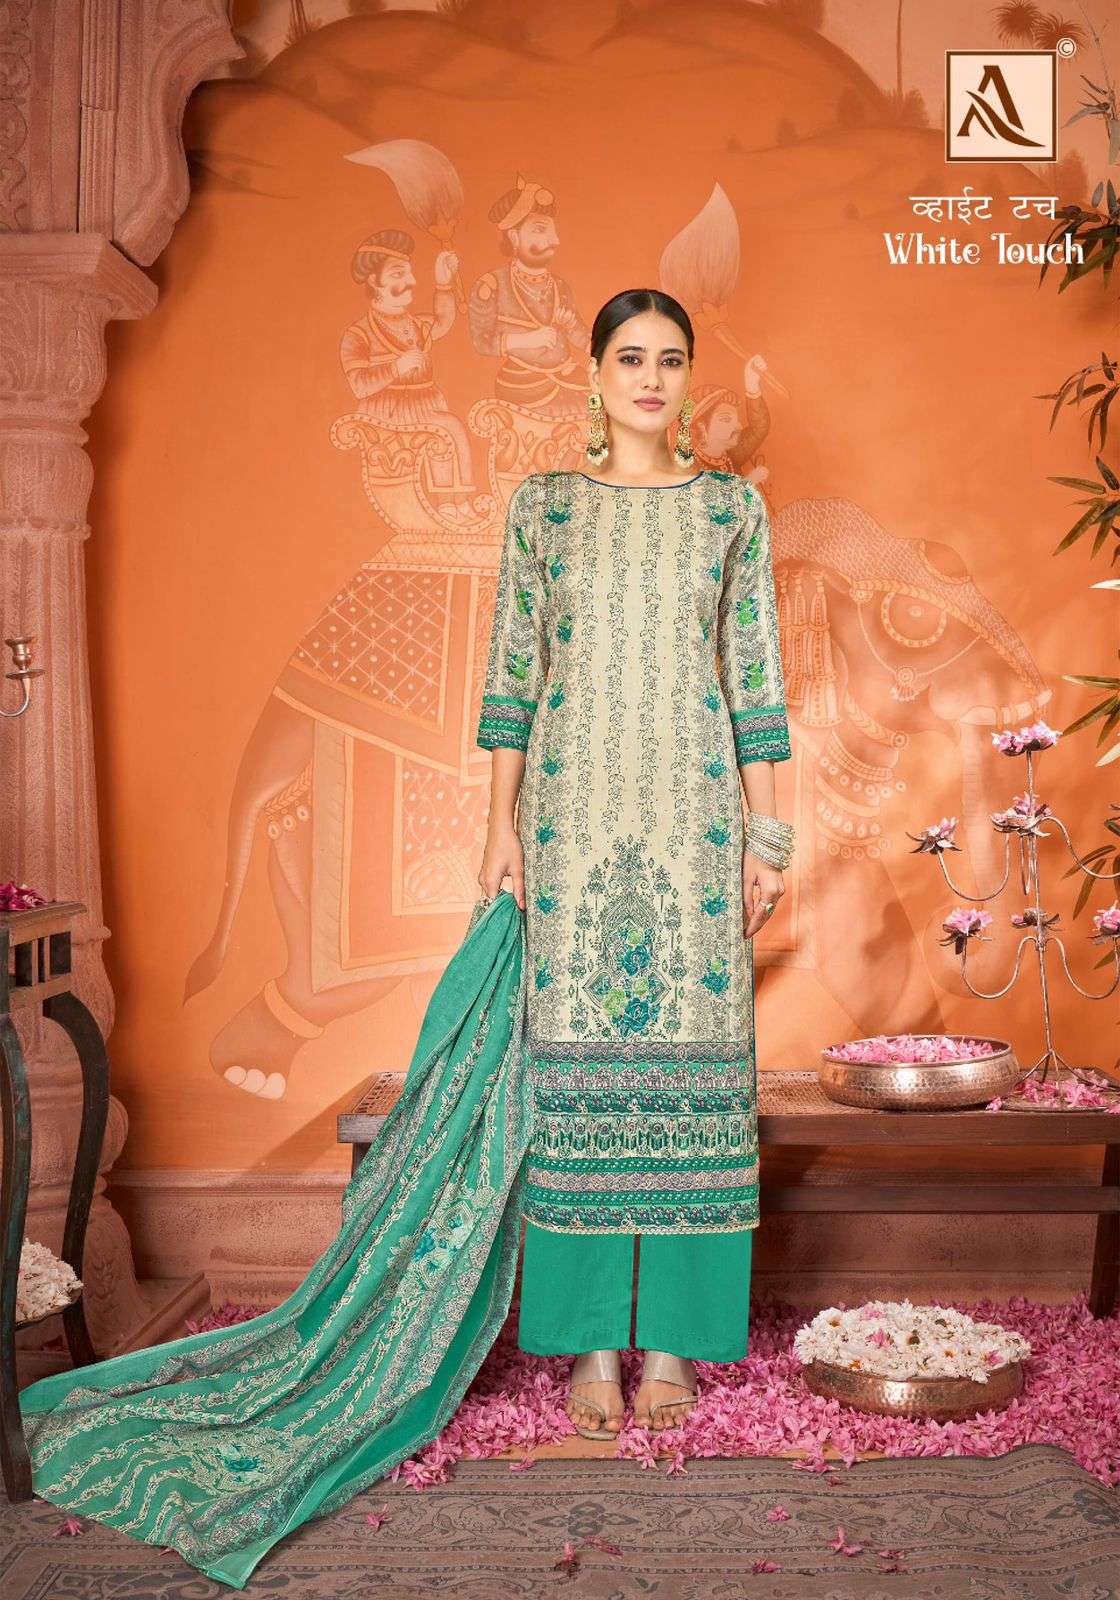 Rent or Buy Punjabi Folk Gidda Fancy Dress Costume Online in India